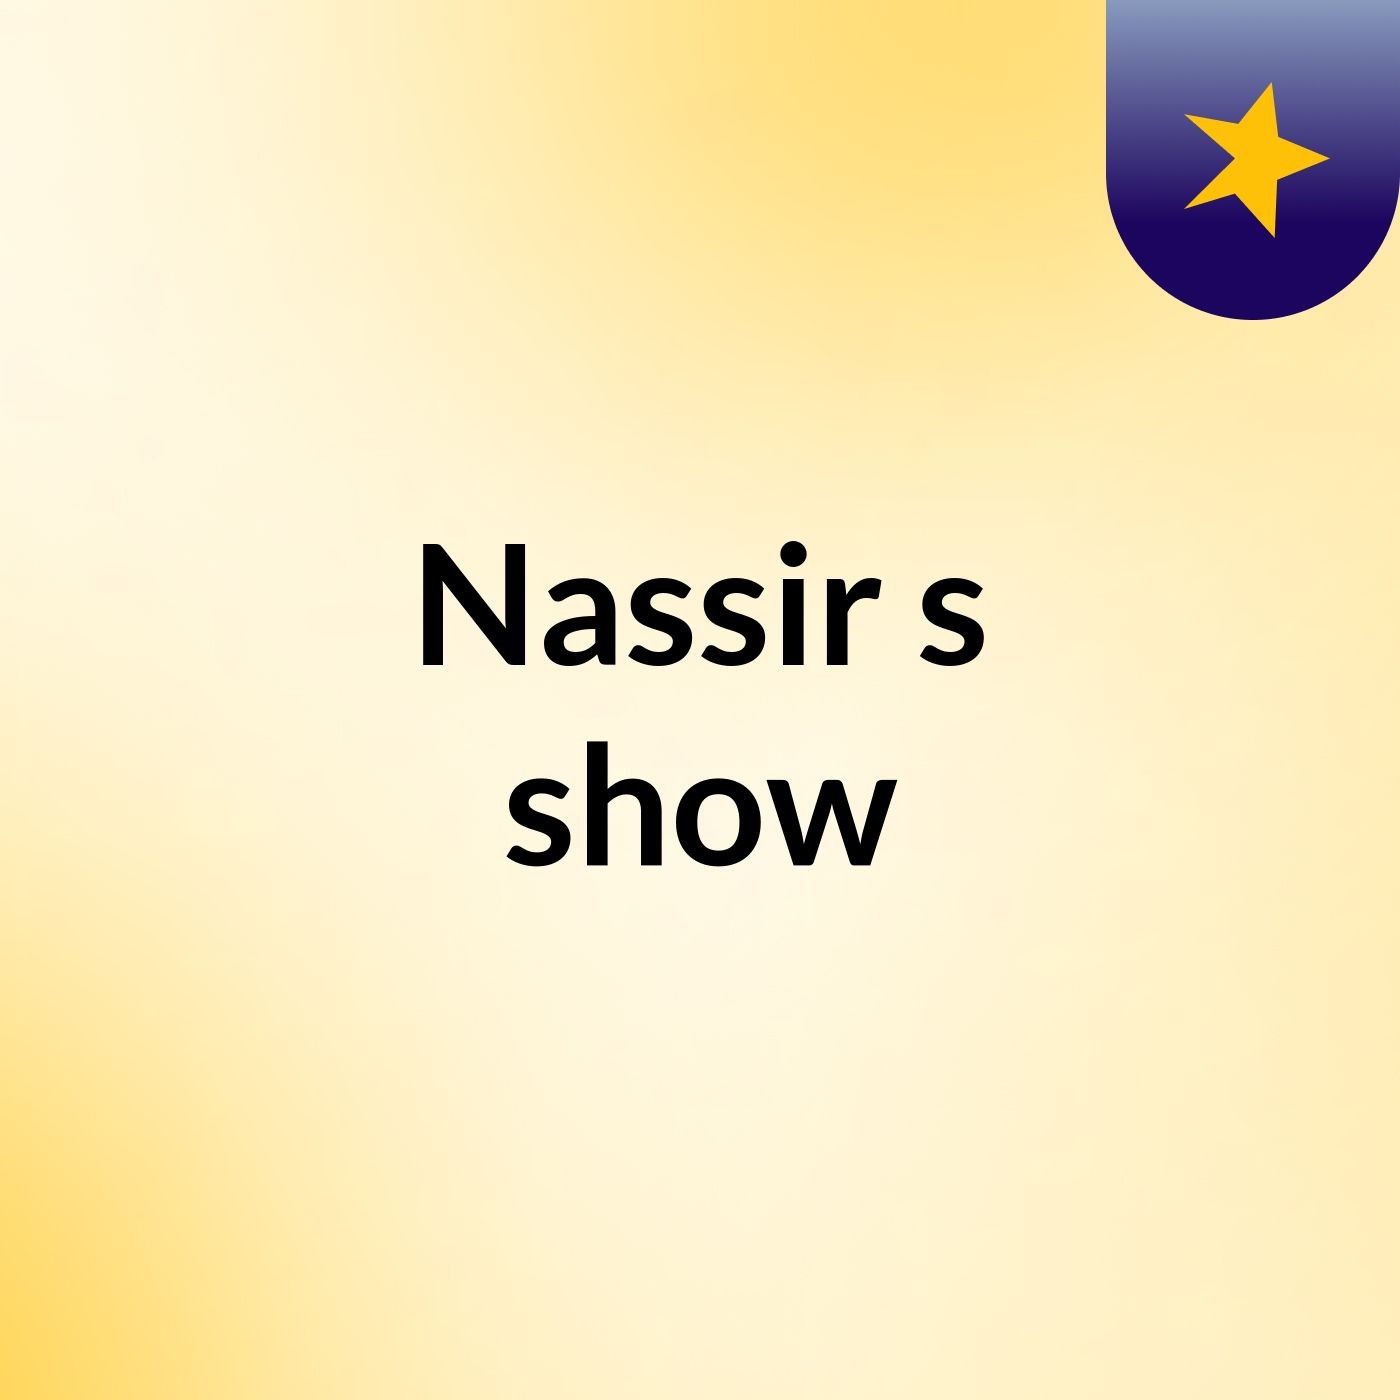 Nassir's show